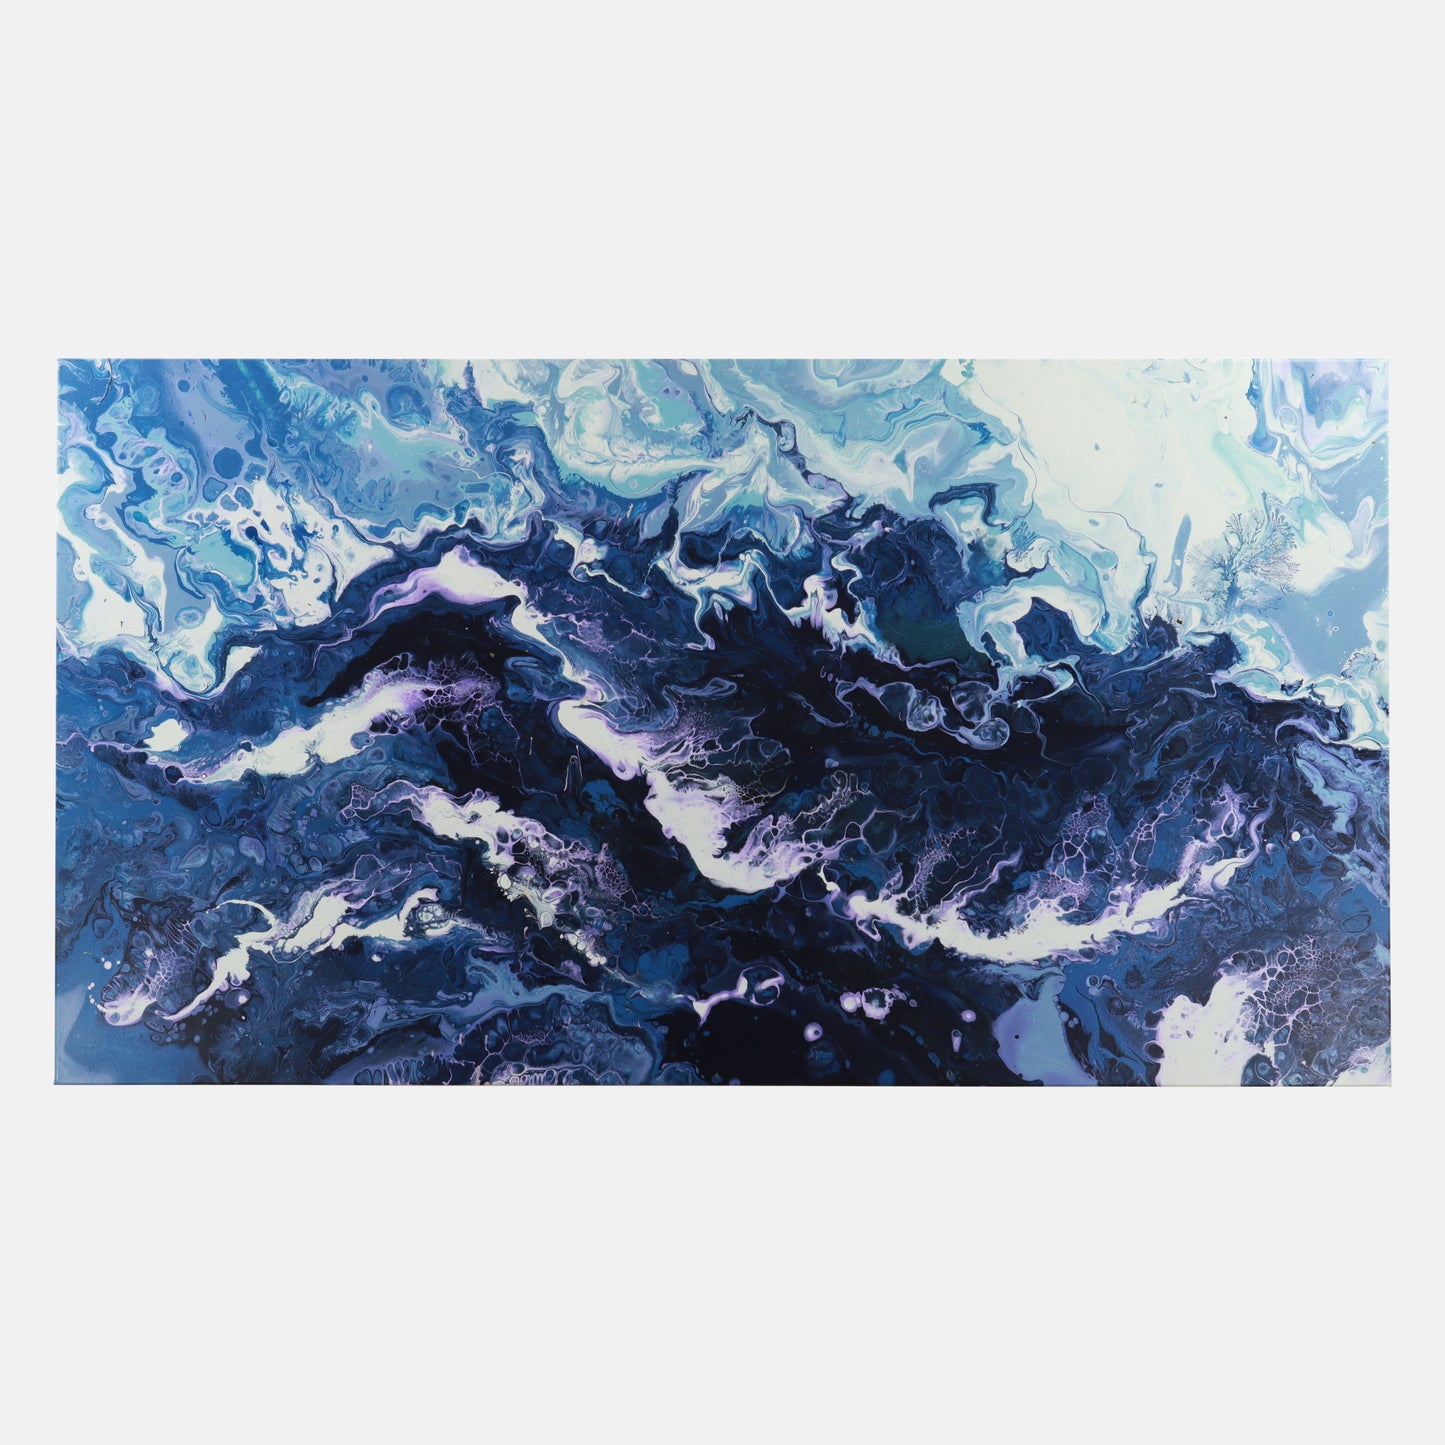 Poured acrylic painting "Sept-Îles" 110cm